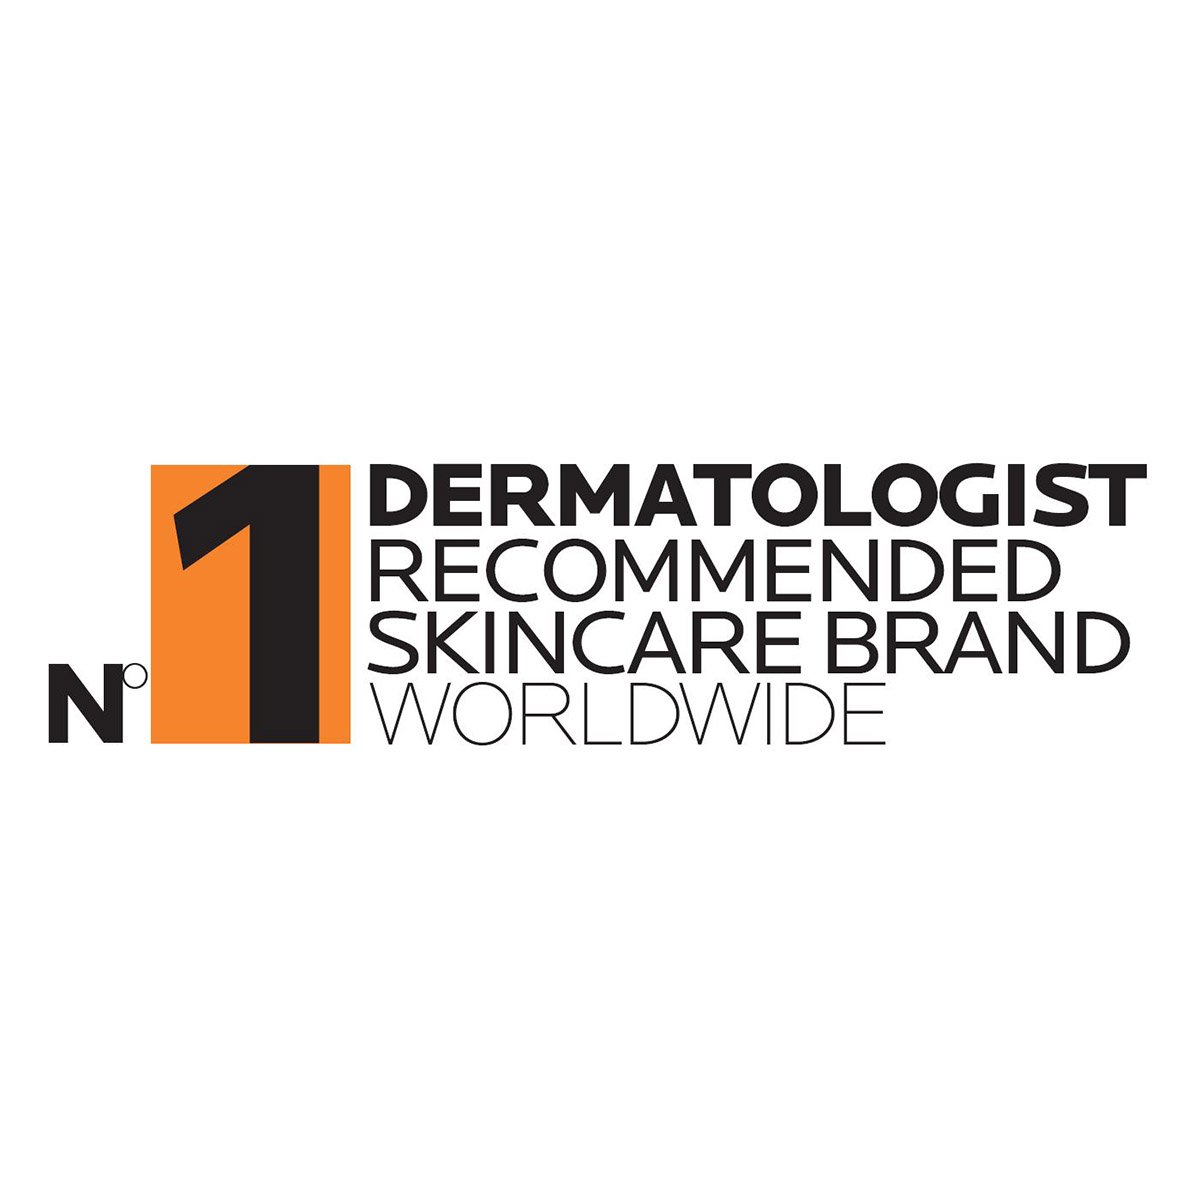 Logo rekomendacji numer jeden wśród dermatologów La Roche-Posay